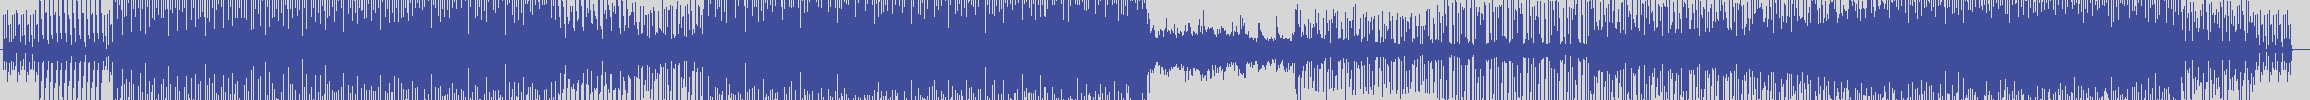 atomic_recordings [AR010] Tommy Vee - Oralsax [Original Mix] audio wave form